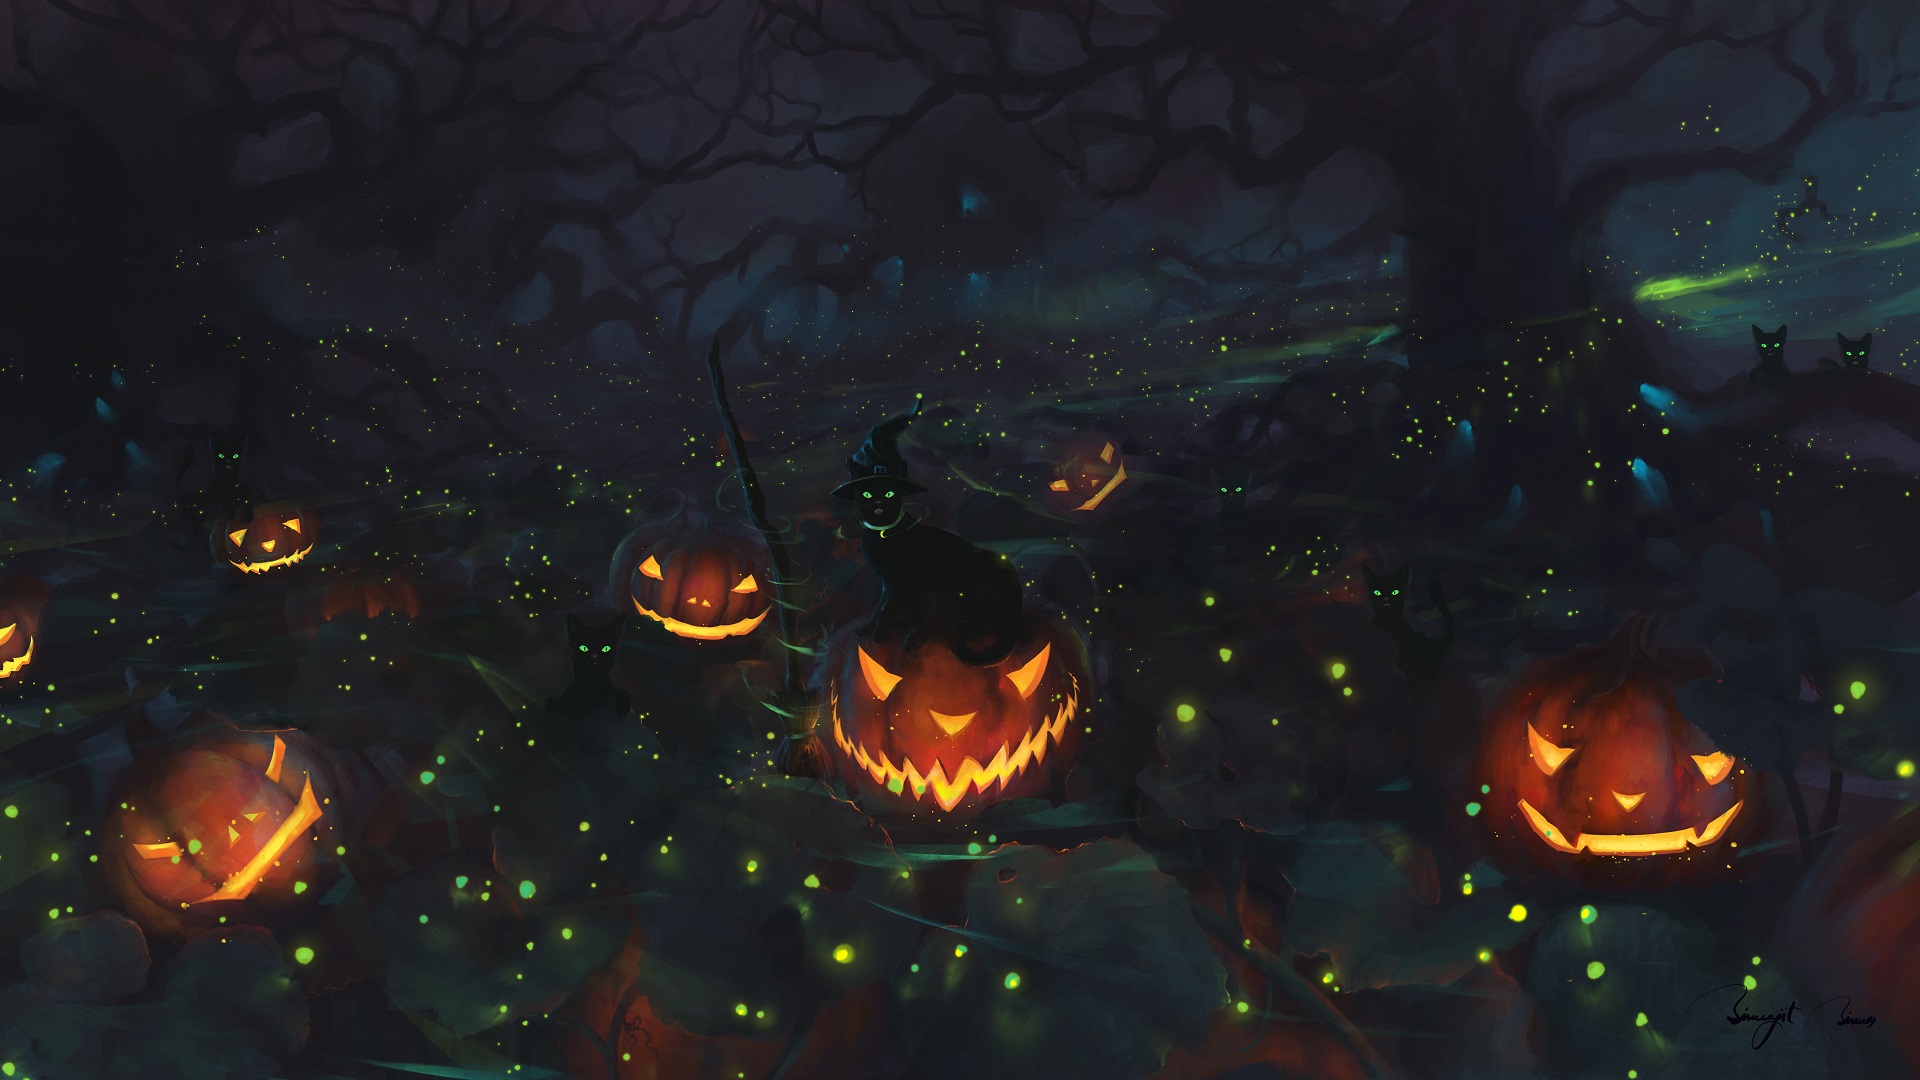 General 1920x1080 BisBiswas black cats cats Halloween pumpkin Jack O' Lantern forest fireflies